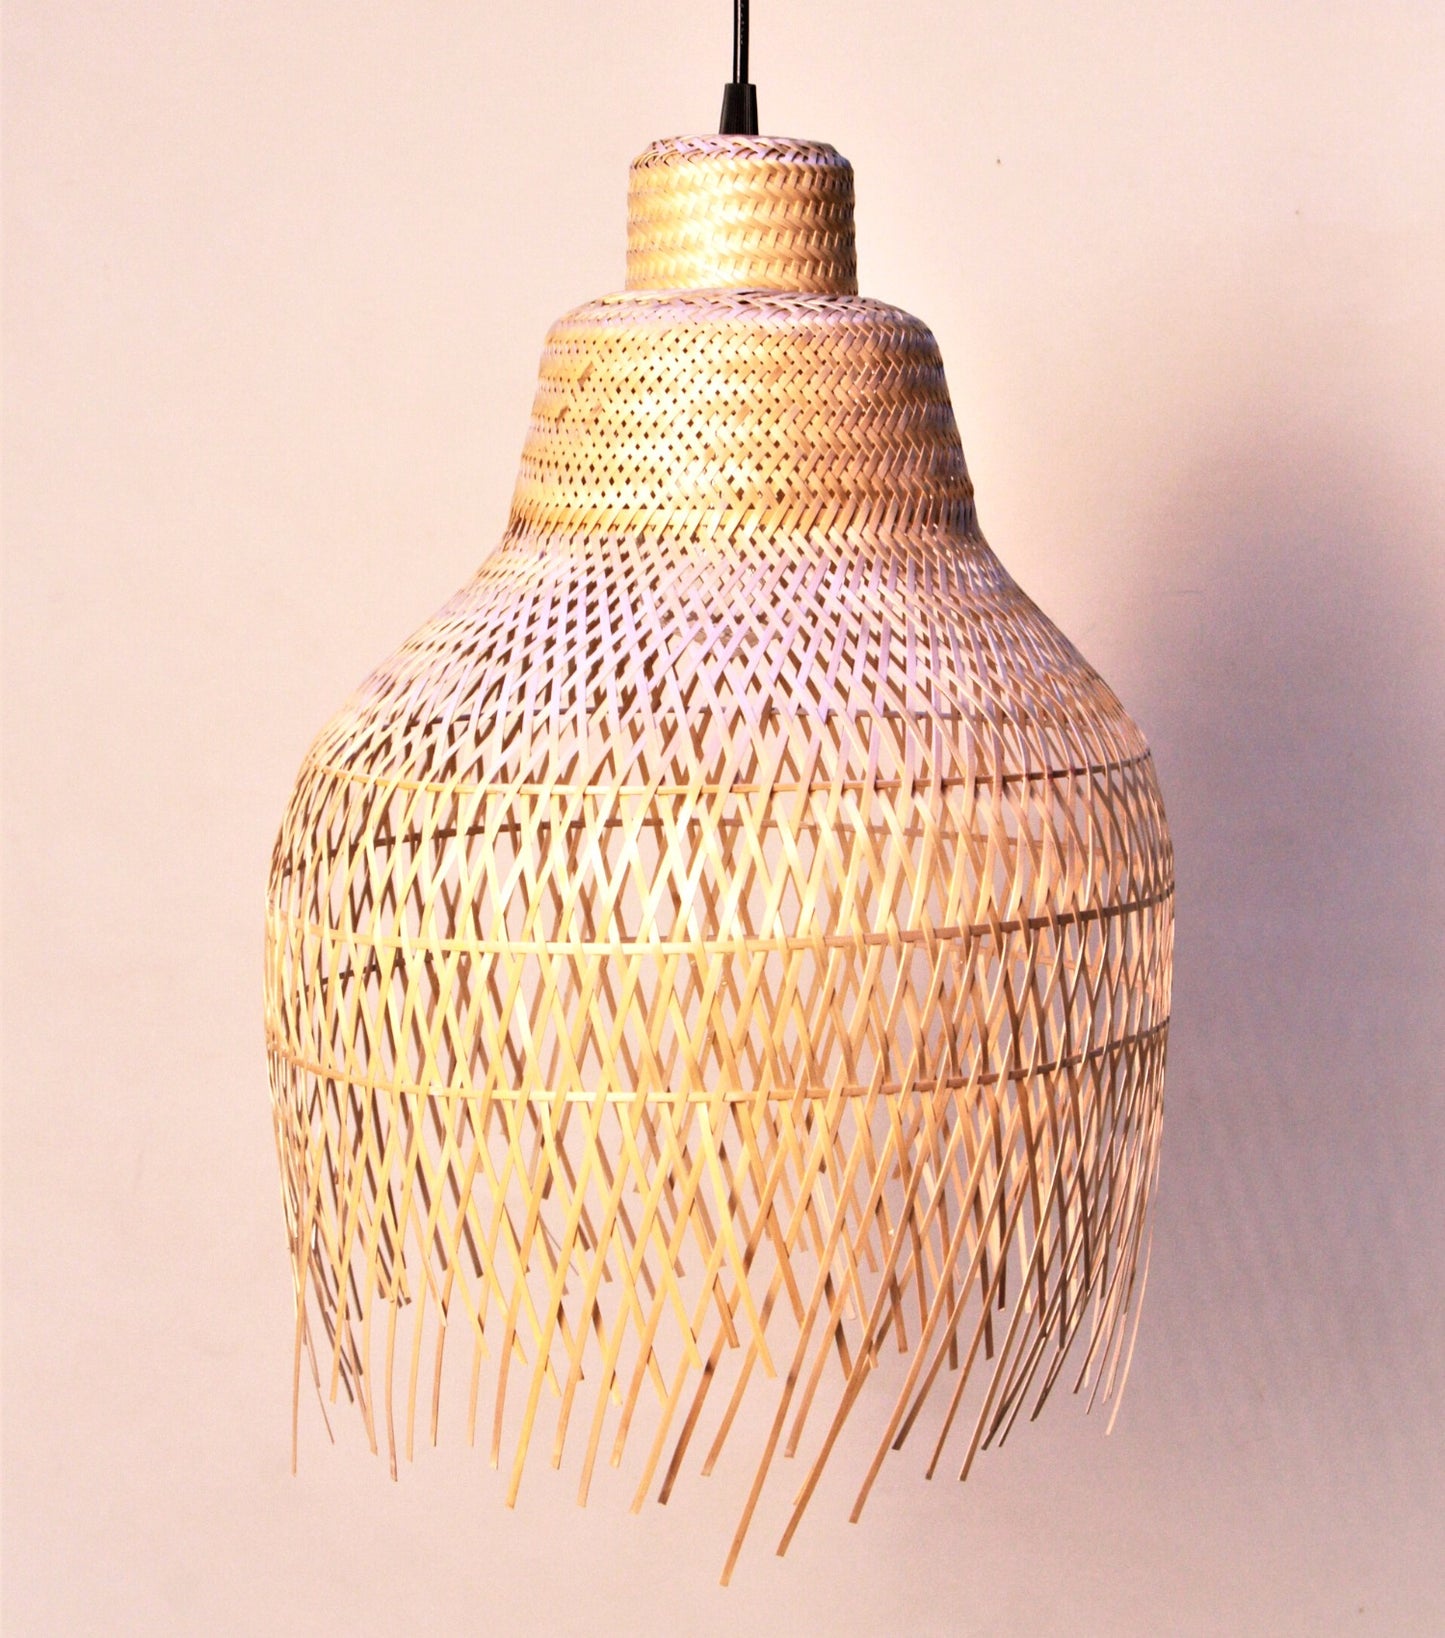 Wicker Light : Bamboo